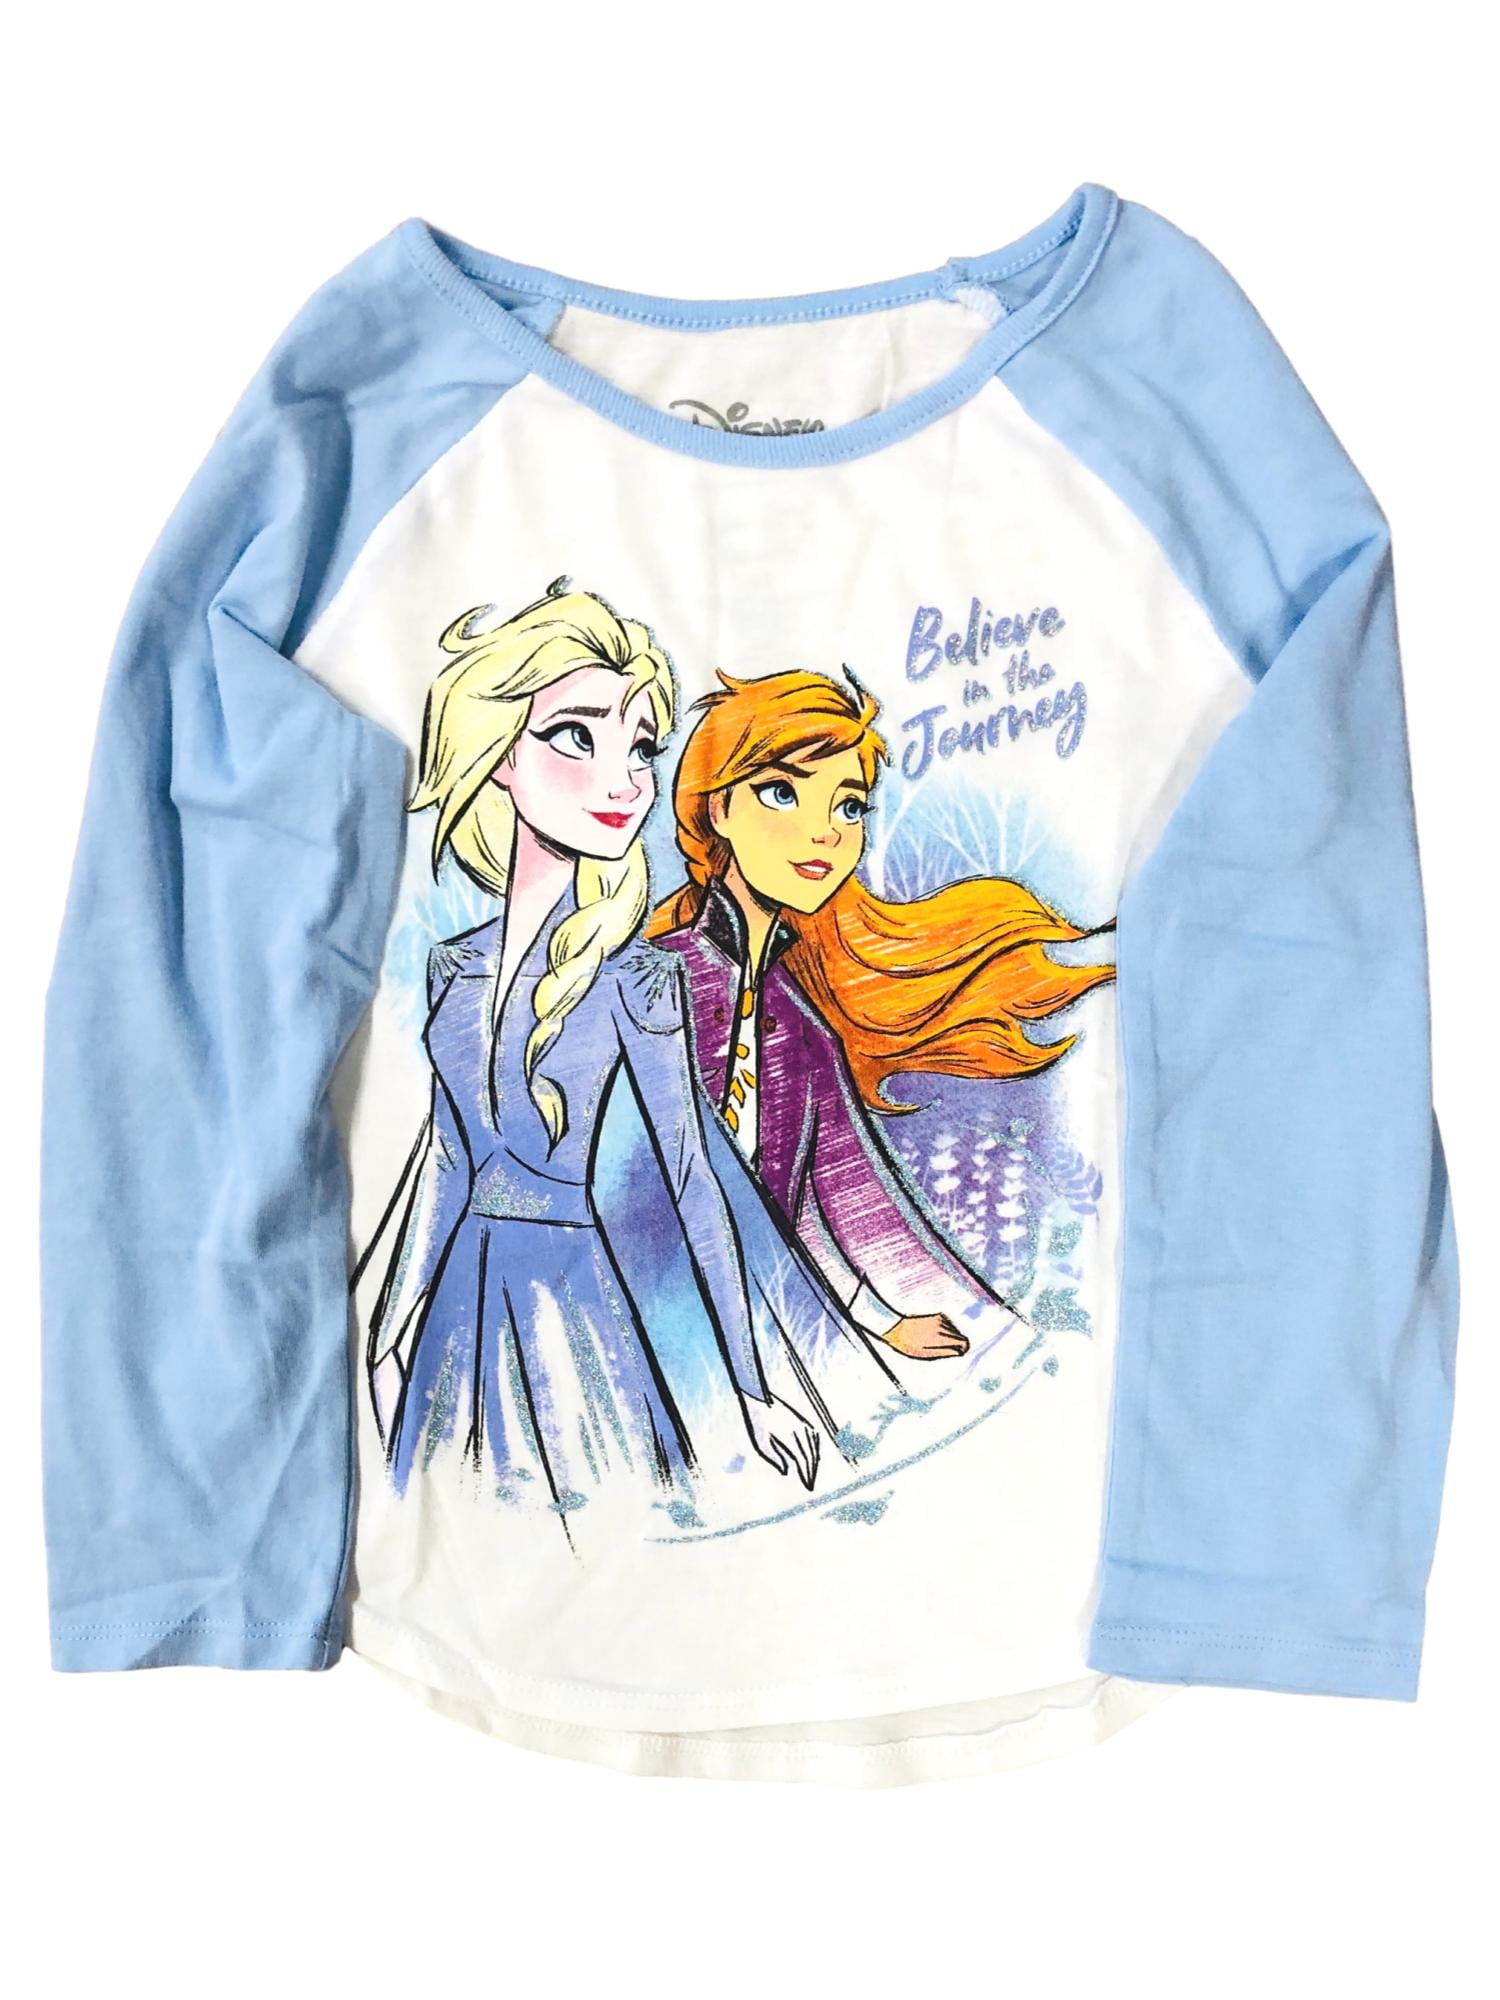 Disney Frozen In Elsa Believe Shirt Tee Girls T-Shirt Toddler 3T The Journey